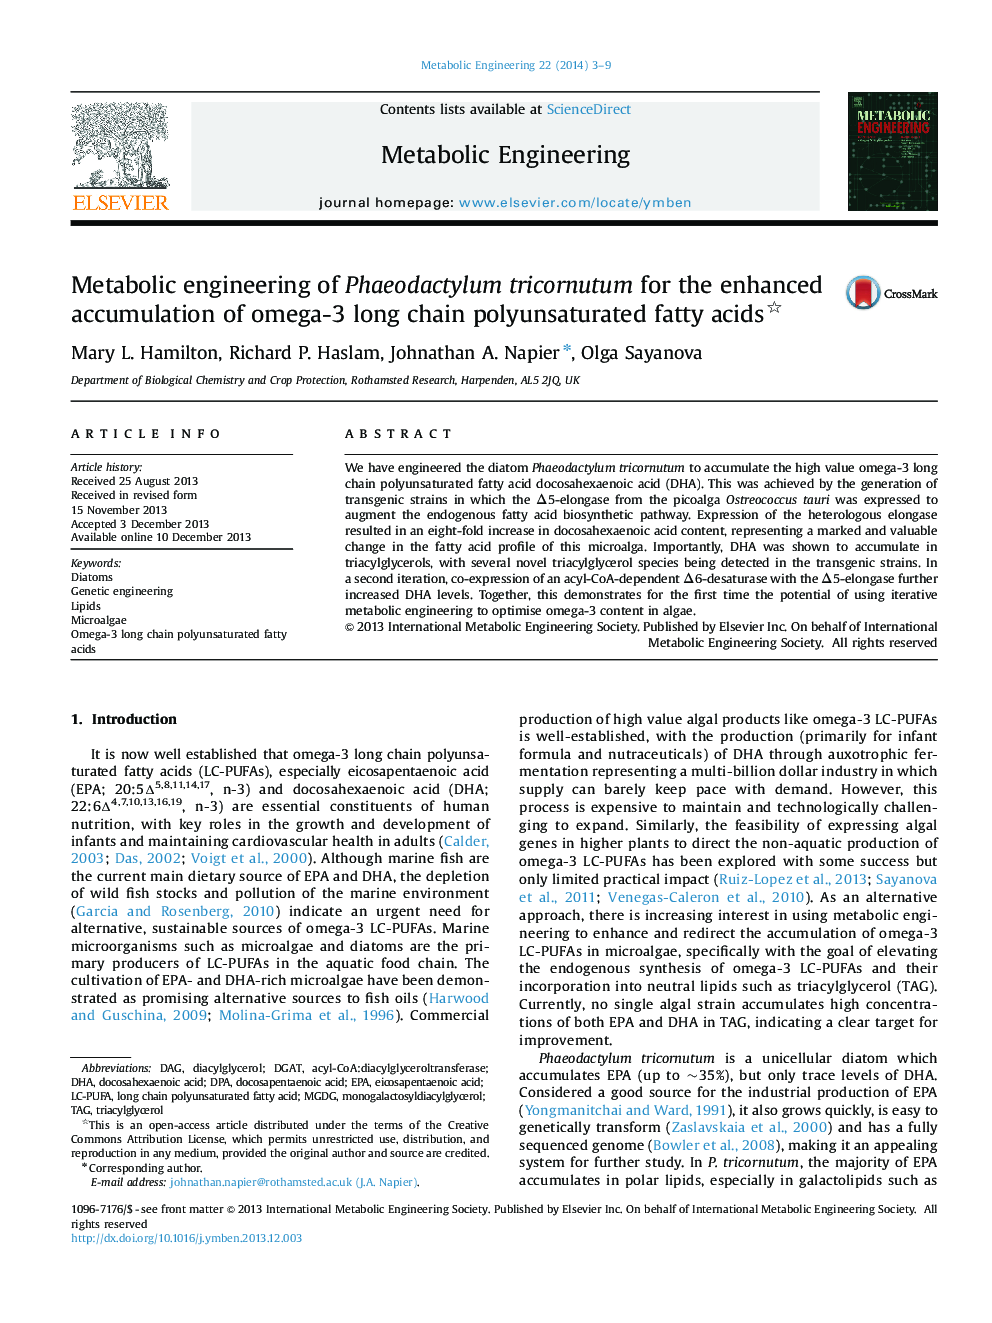 Metabolic engineering of Phaeodactylum tricornutum for the enhanced accumulation of omega-3 long chain polyunsaturated fatty acids